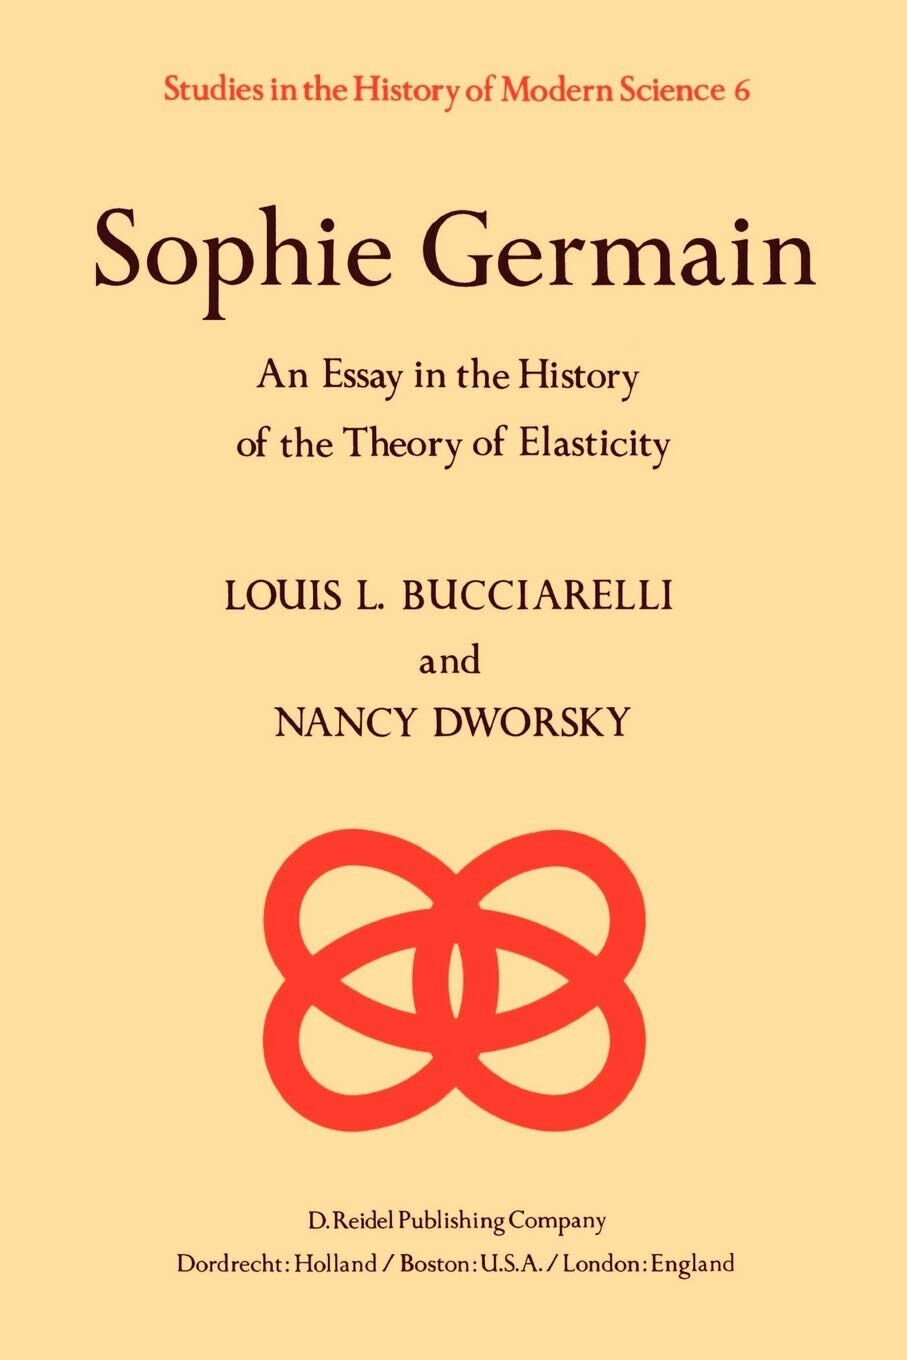 Sophie Germain - L. L. Bucciarelli, N. Dworsky - Springer, 2013